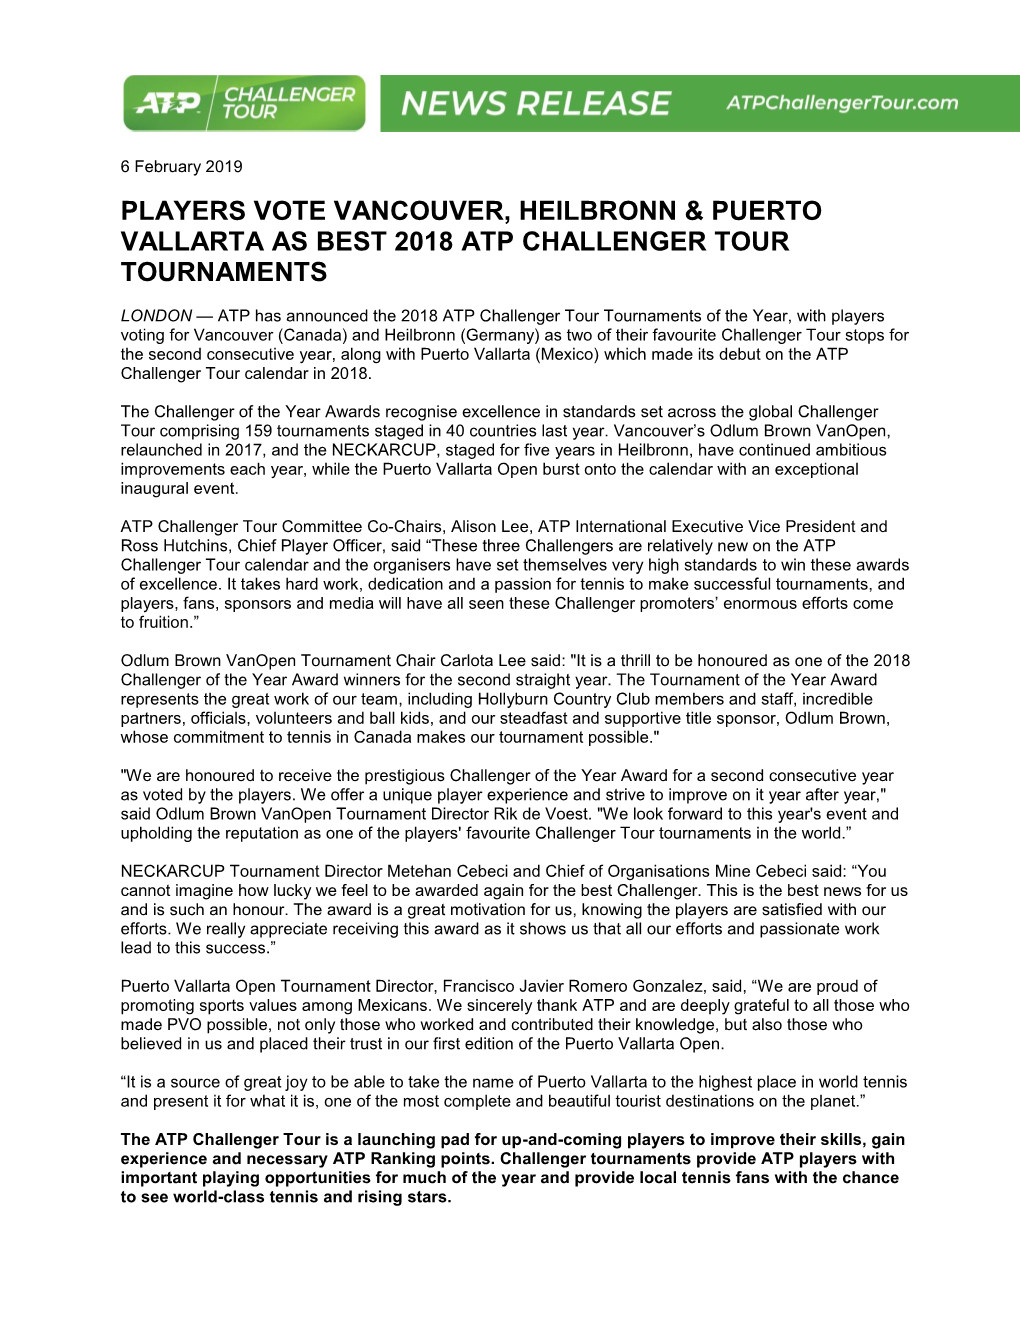 Players Vote Vancouver, Heilbronn & Puerto